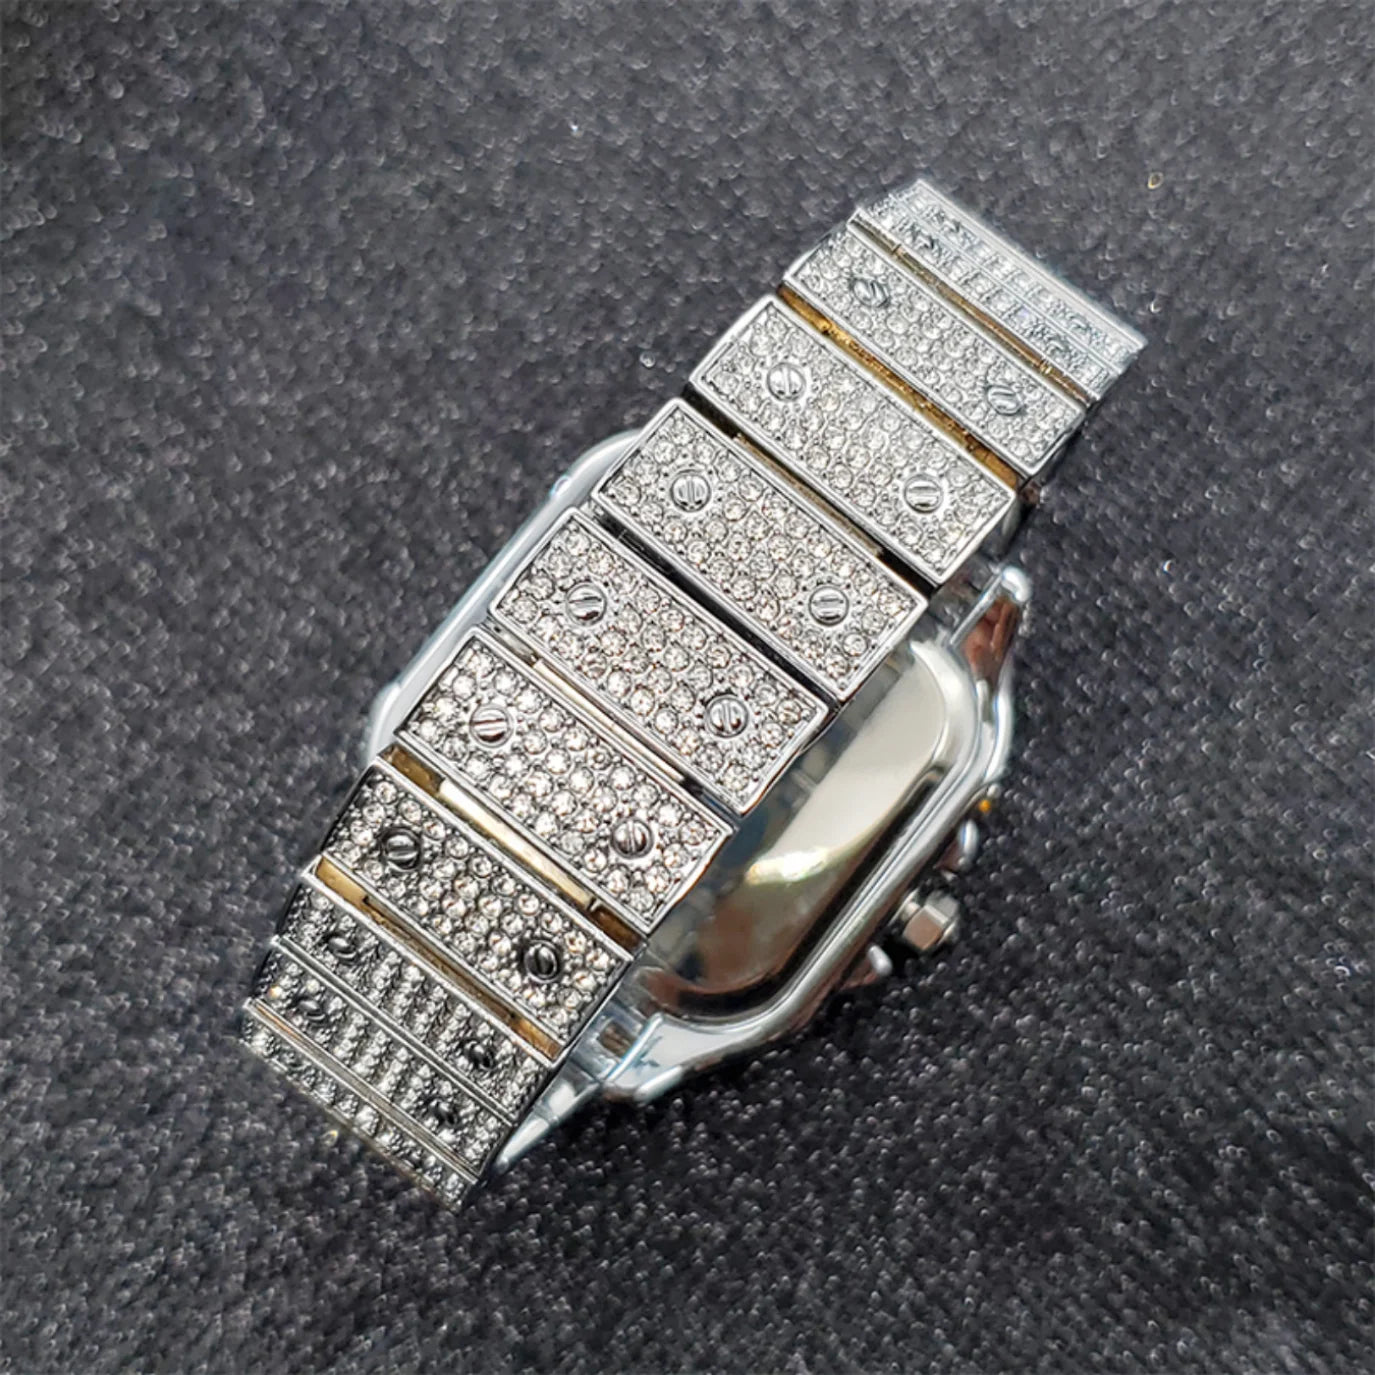 New Moissanite Bezel for Watch 41mm Luxury Watches For Men Women Waterproof Quartz Watch Charming Jewelry Accessories AAA Clock LUXLIFE BRANDS